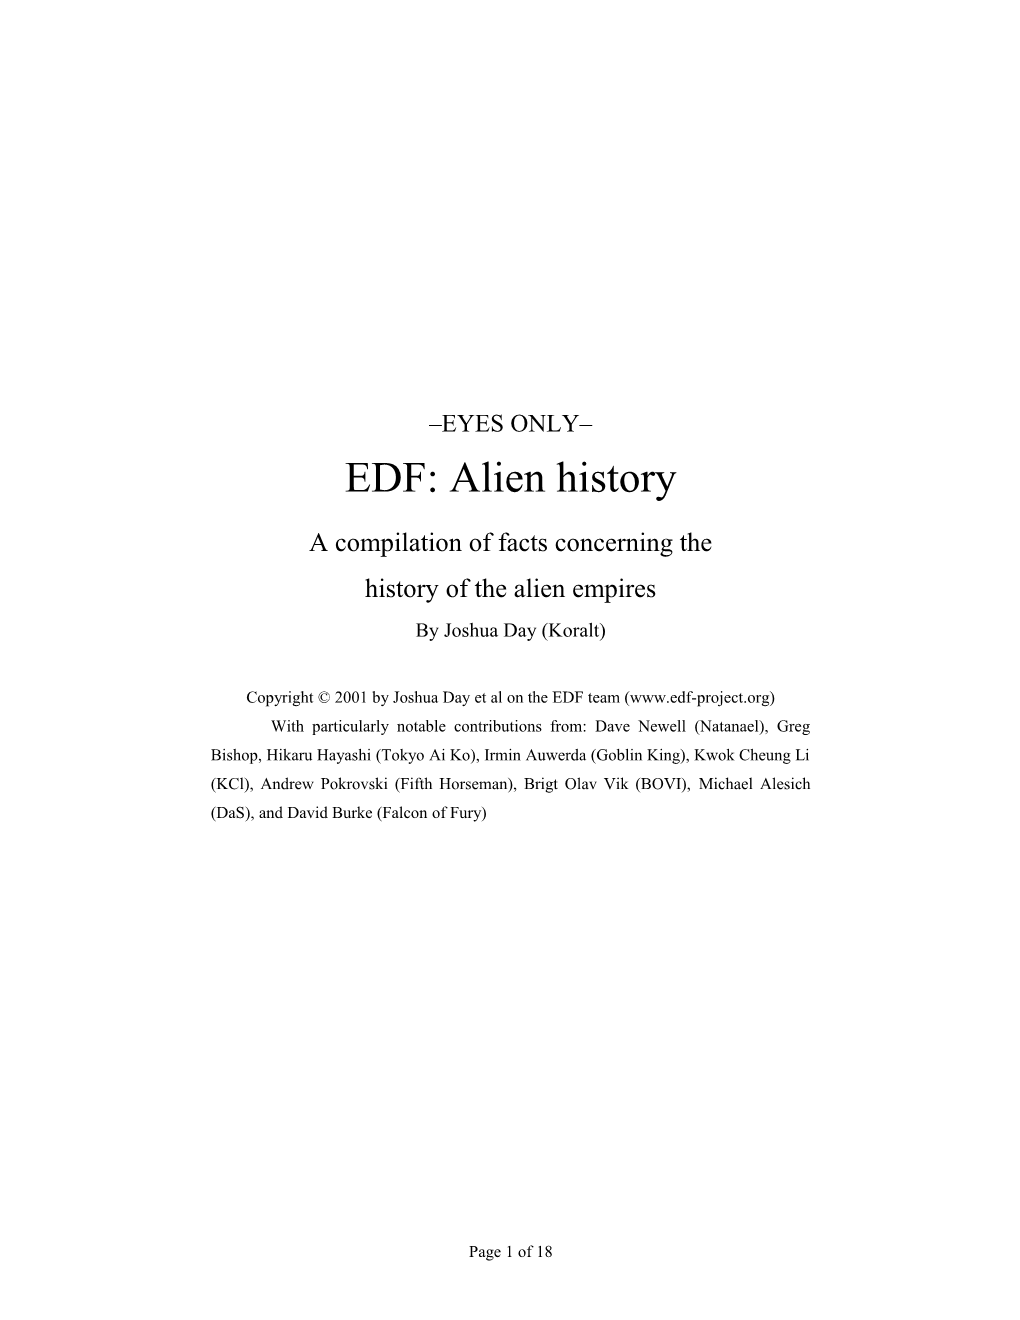 EDF: Alien History